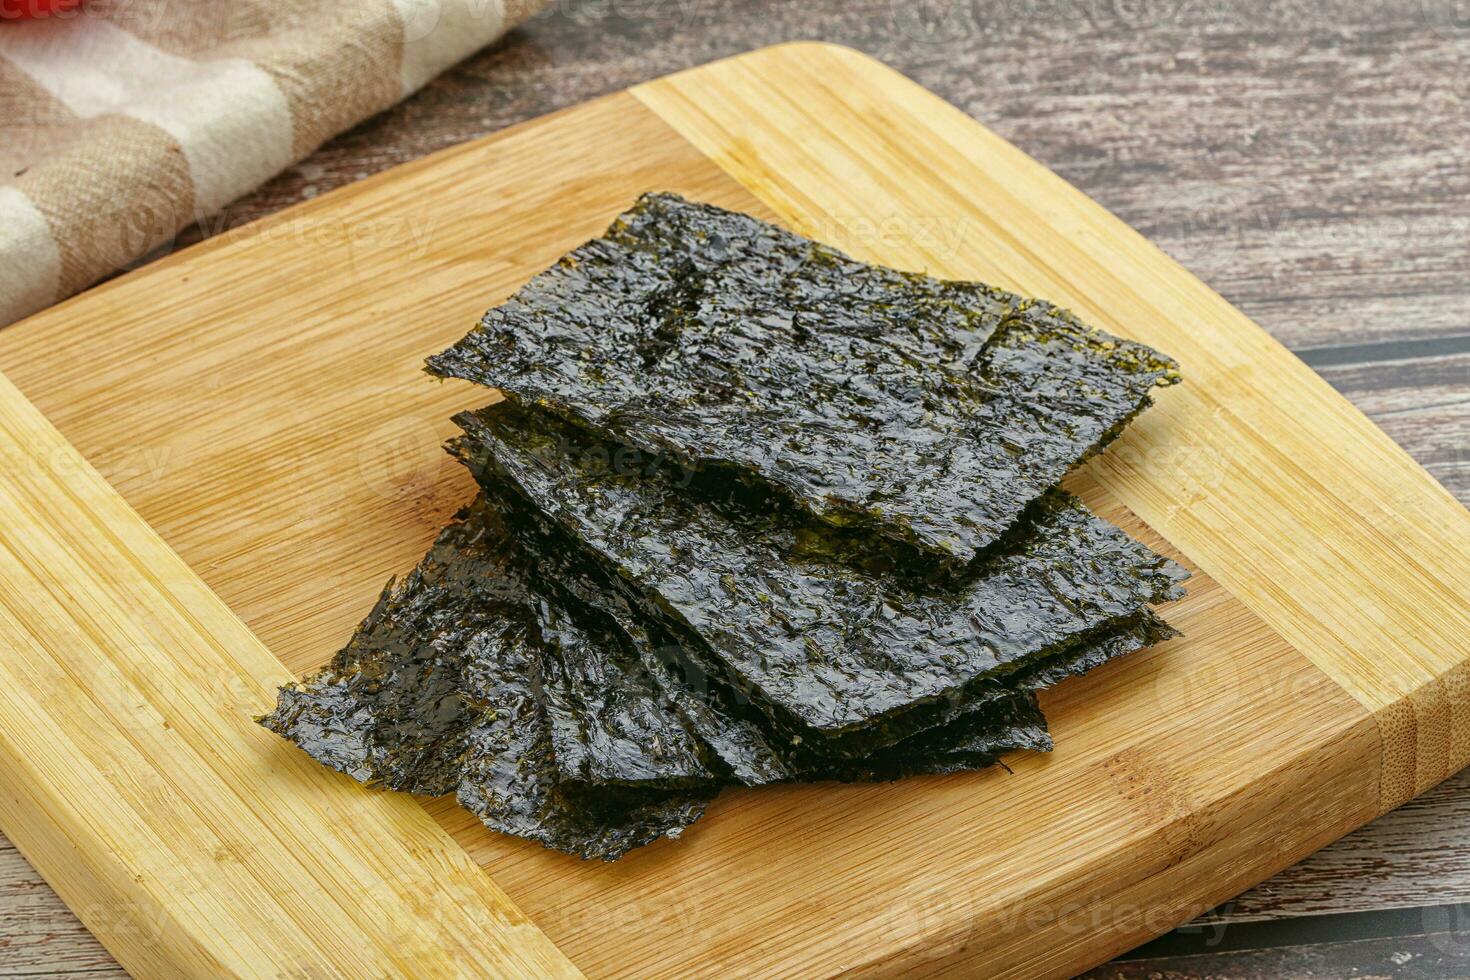 Korean cuisine - Nori seaweed chips photo